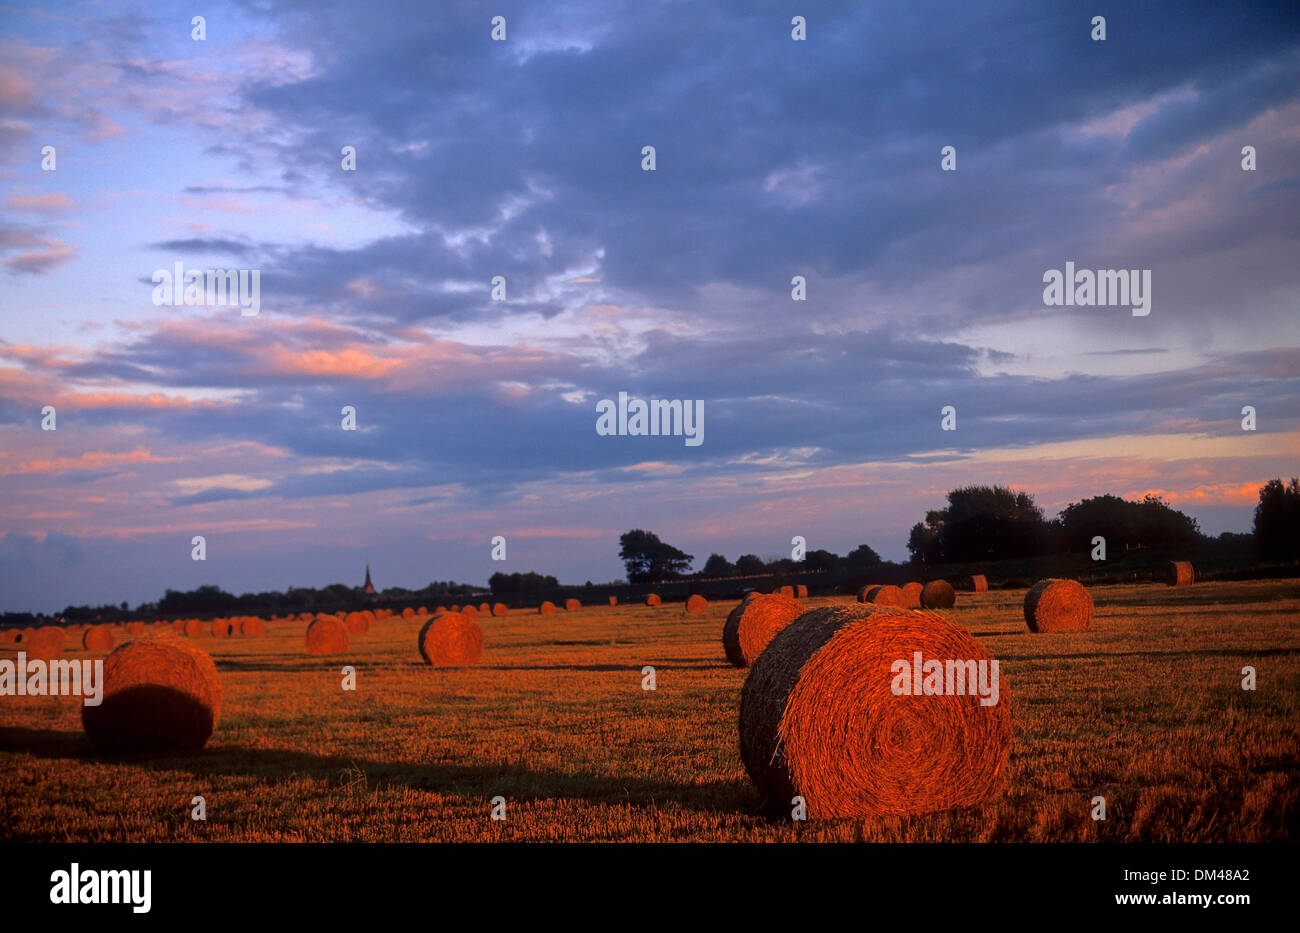 Straw bales on field at sunset, Strohballen auf Feld im Sonnenuntergang Stock Photo